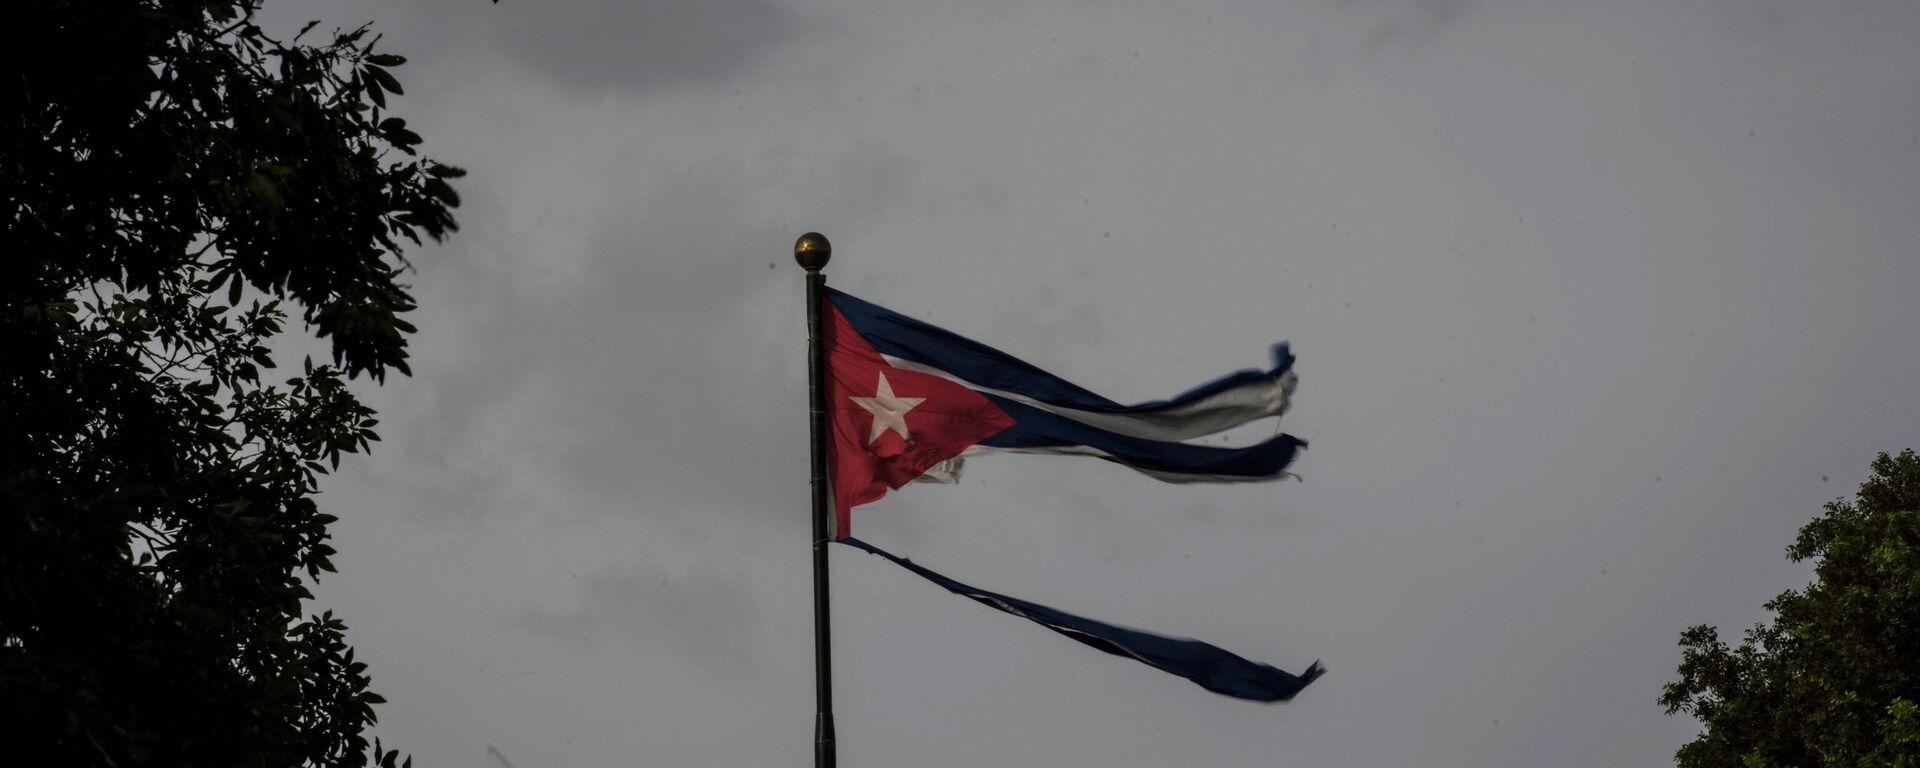 La bandera de Cuba durante el huracán Ian - Sputnik Mundo, 1920, 03.10.2022